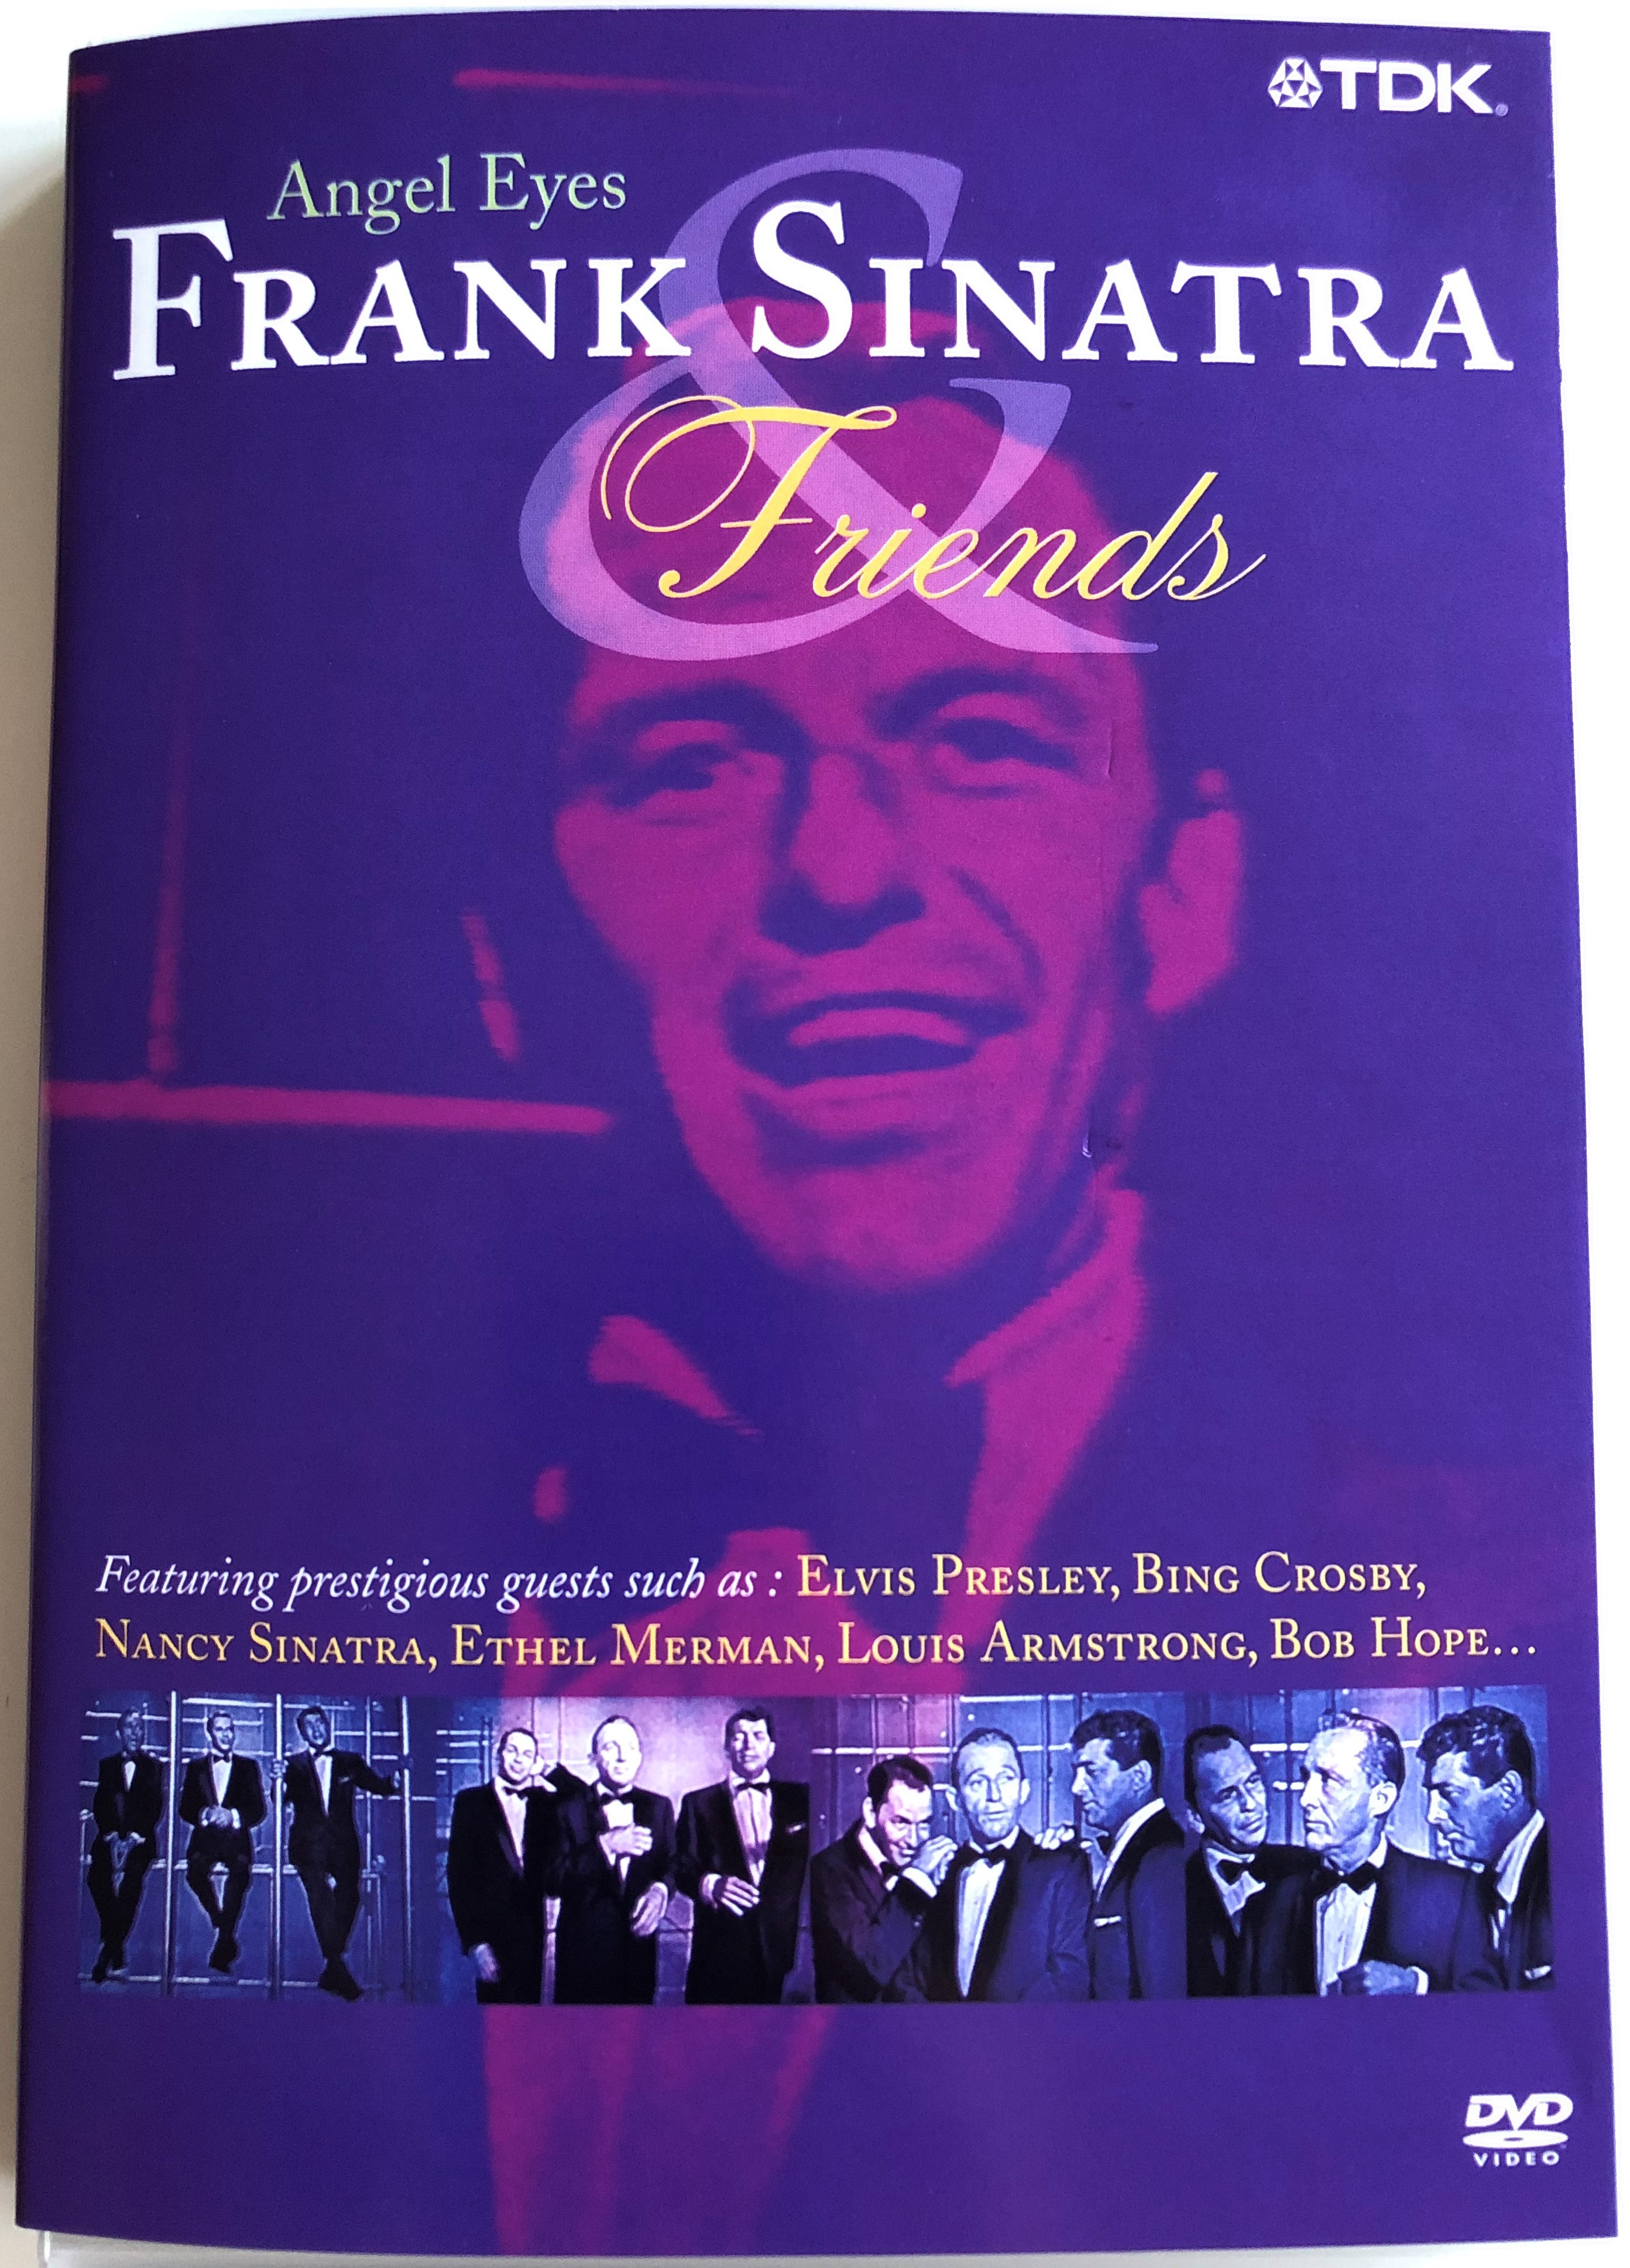 Angel Eyes - Frank Sinatra & Friends DVD 2003 1.JPG